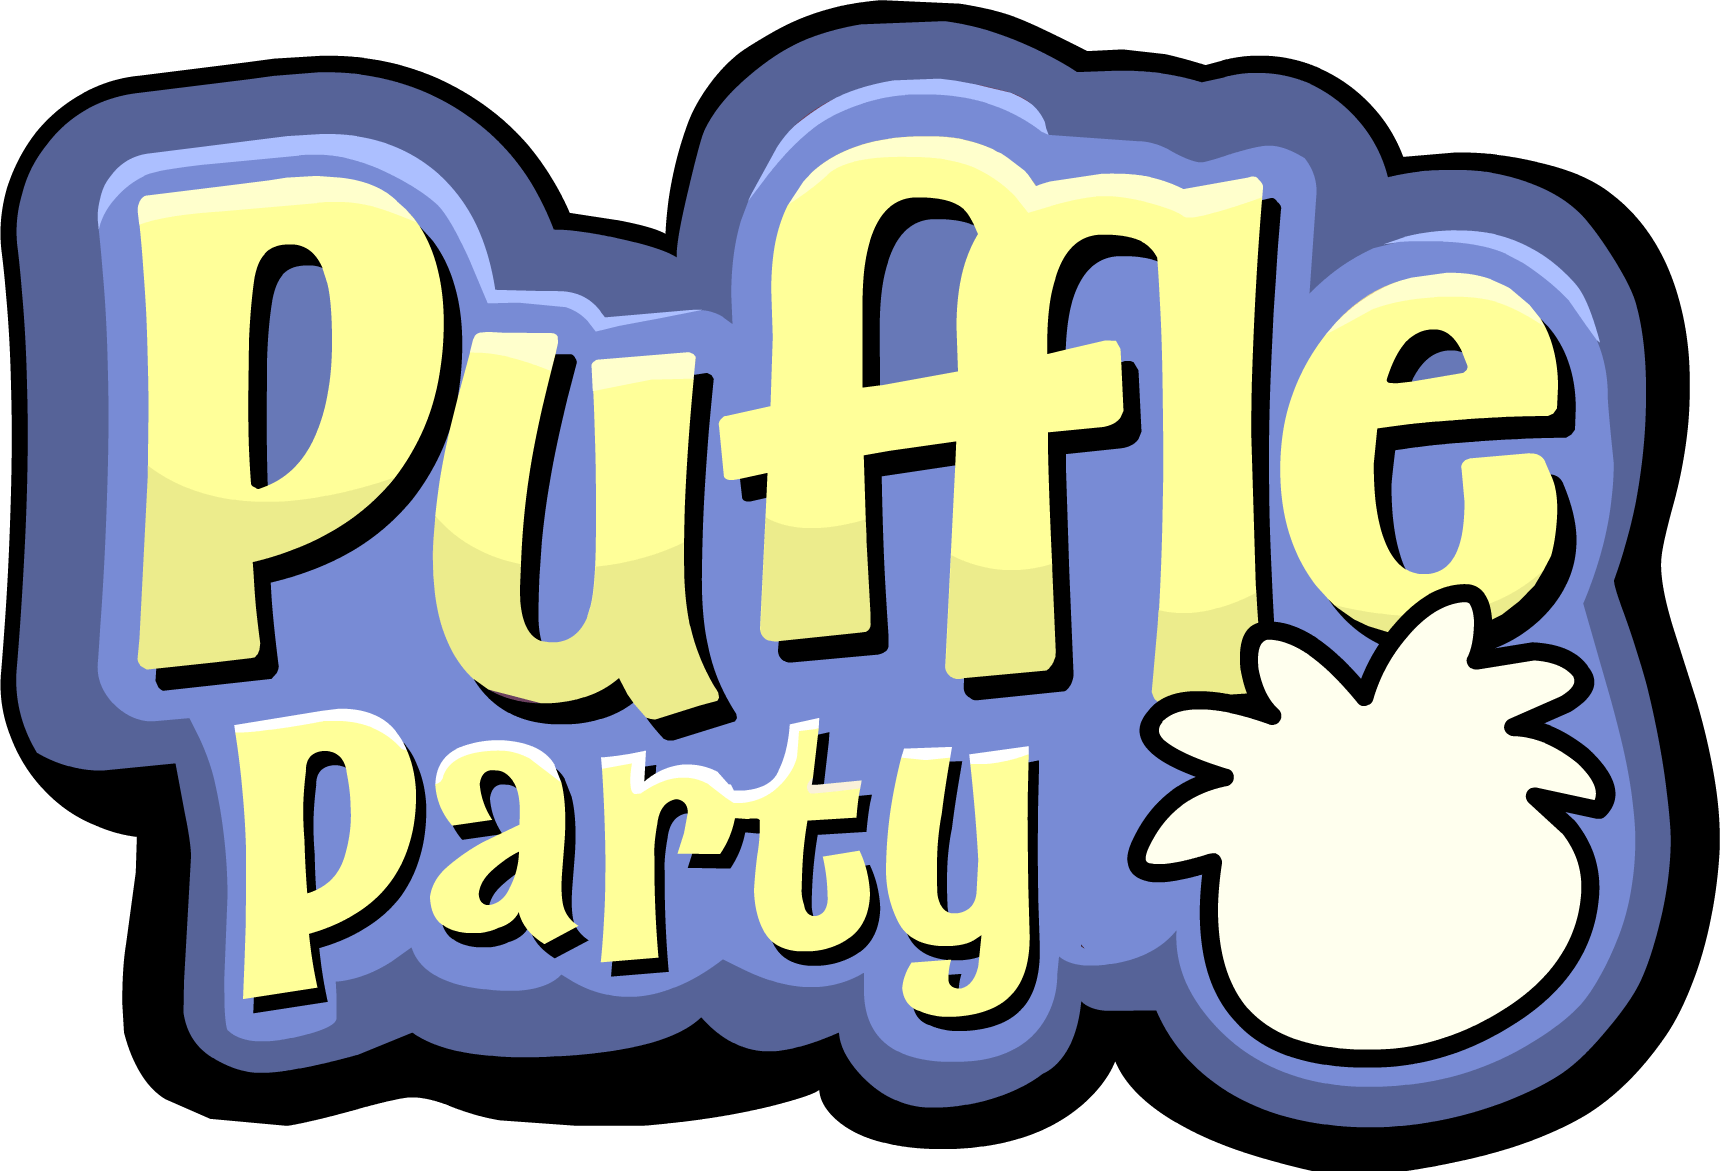 Club Penguin Logo - Puffle Party 2012